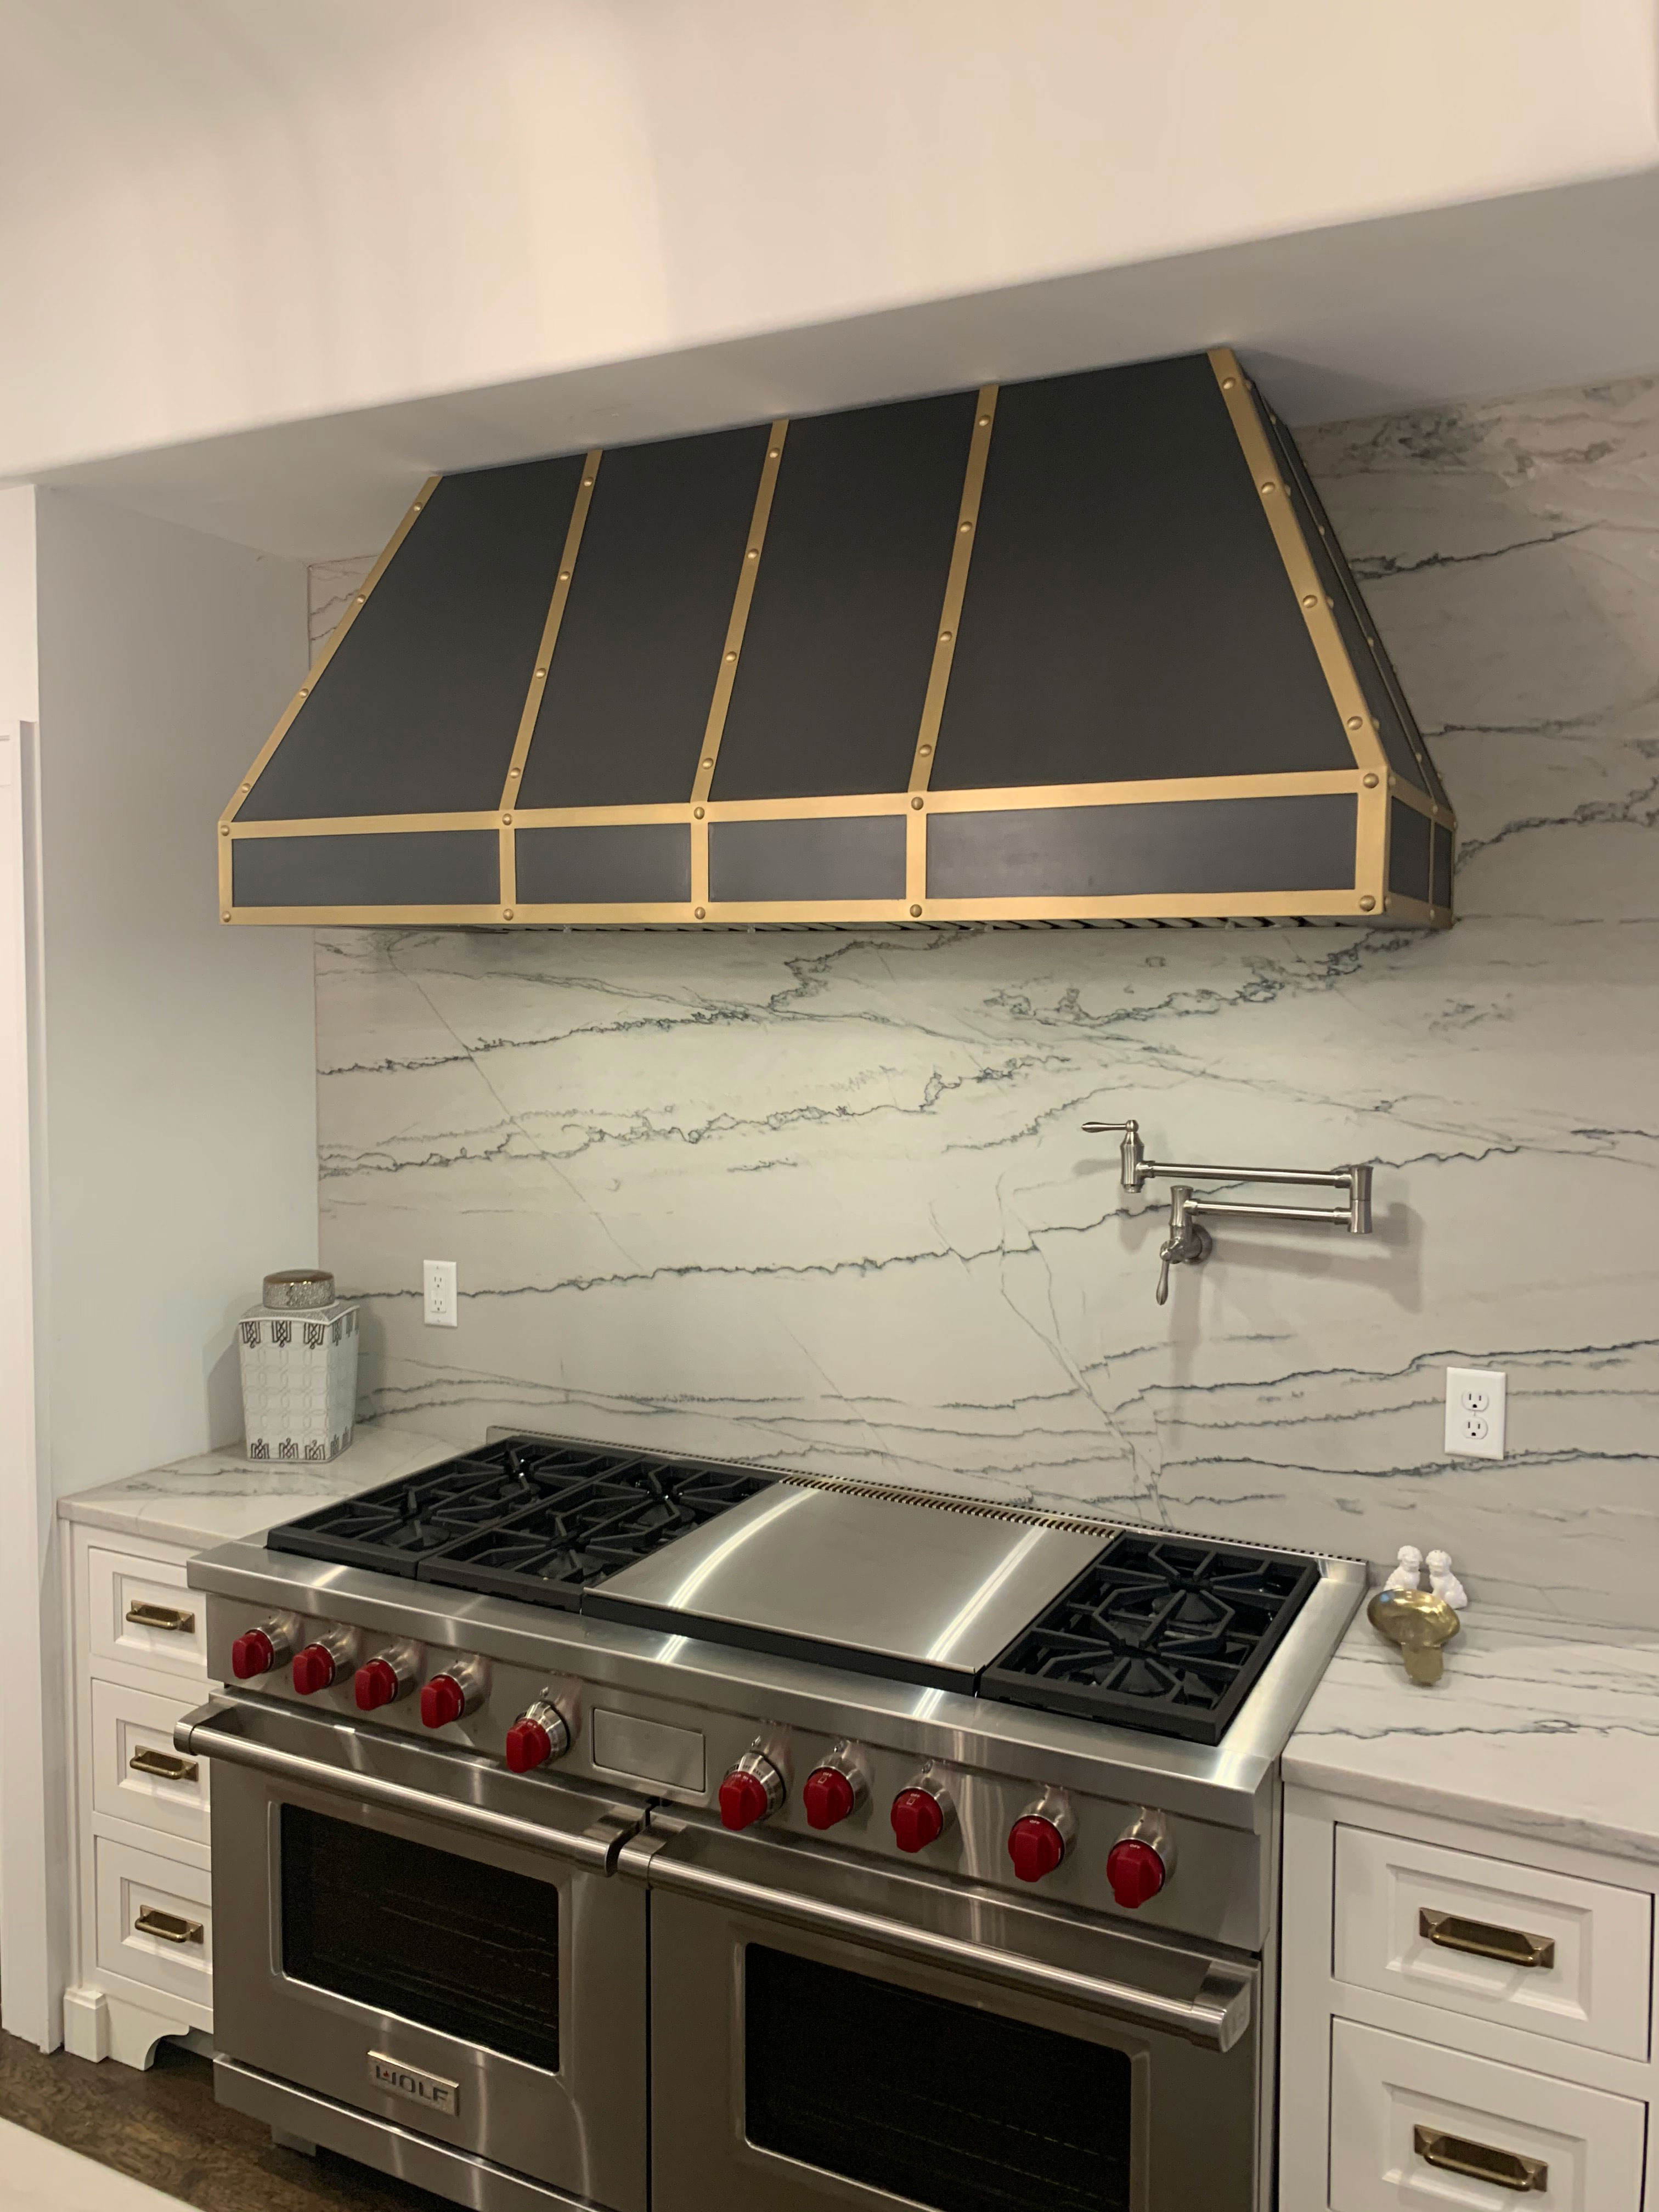 Timeless kitchen design idea with stylish range hood, including white kitchen cabinets, white countertops and marble backsplash